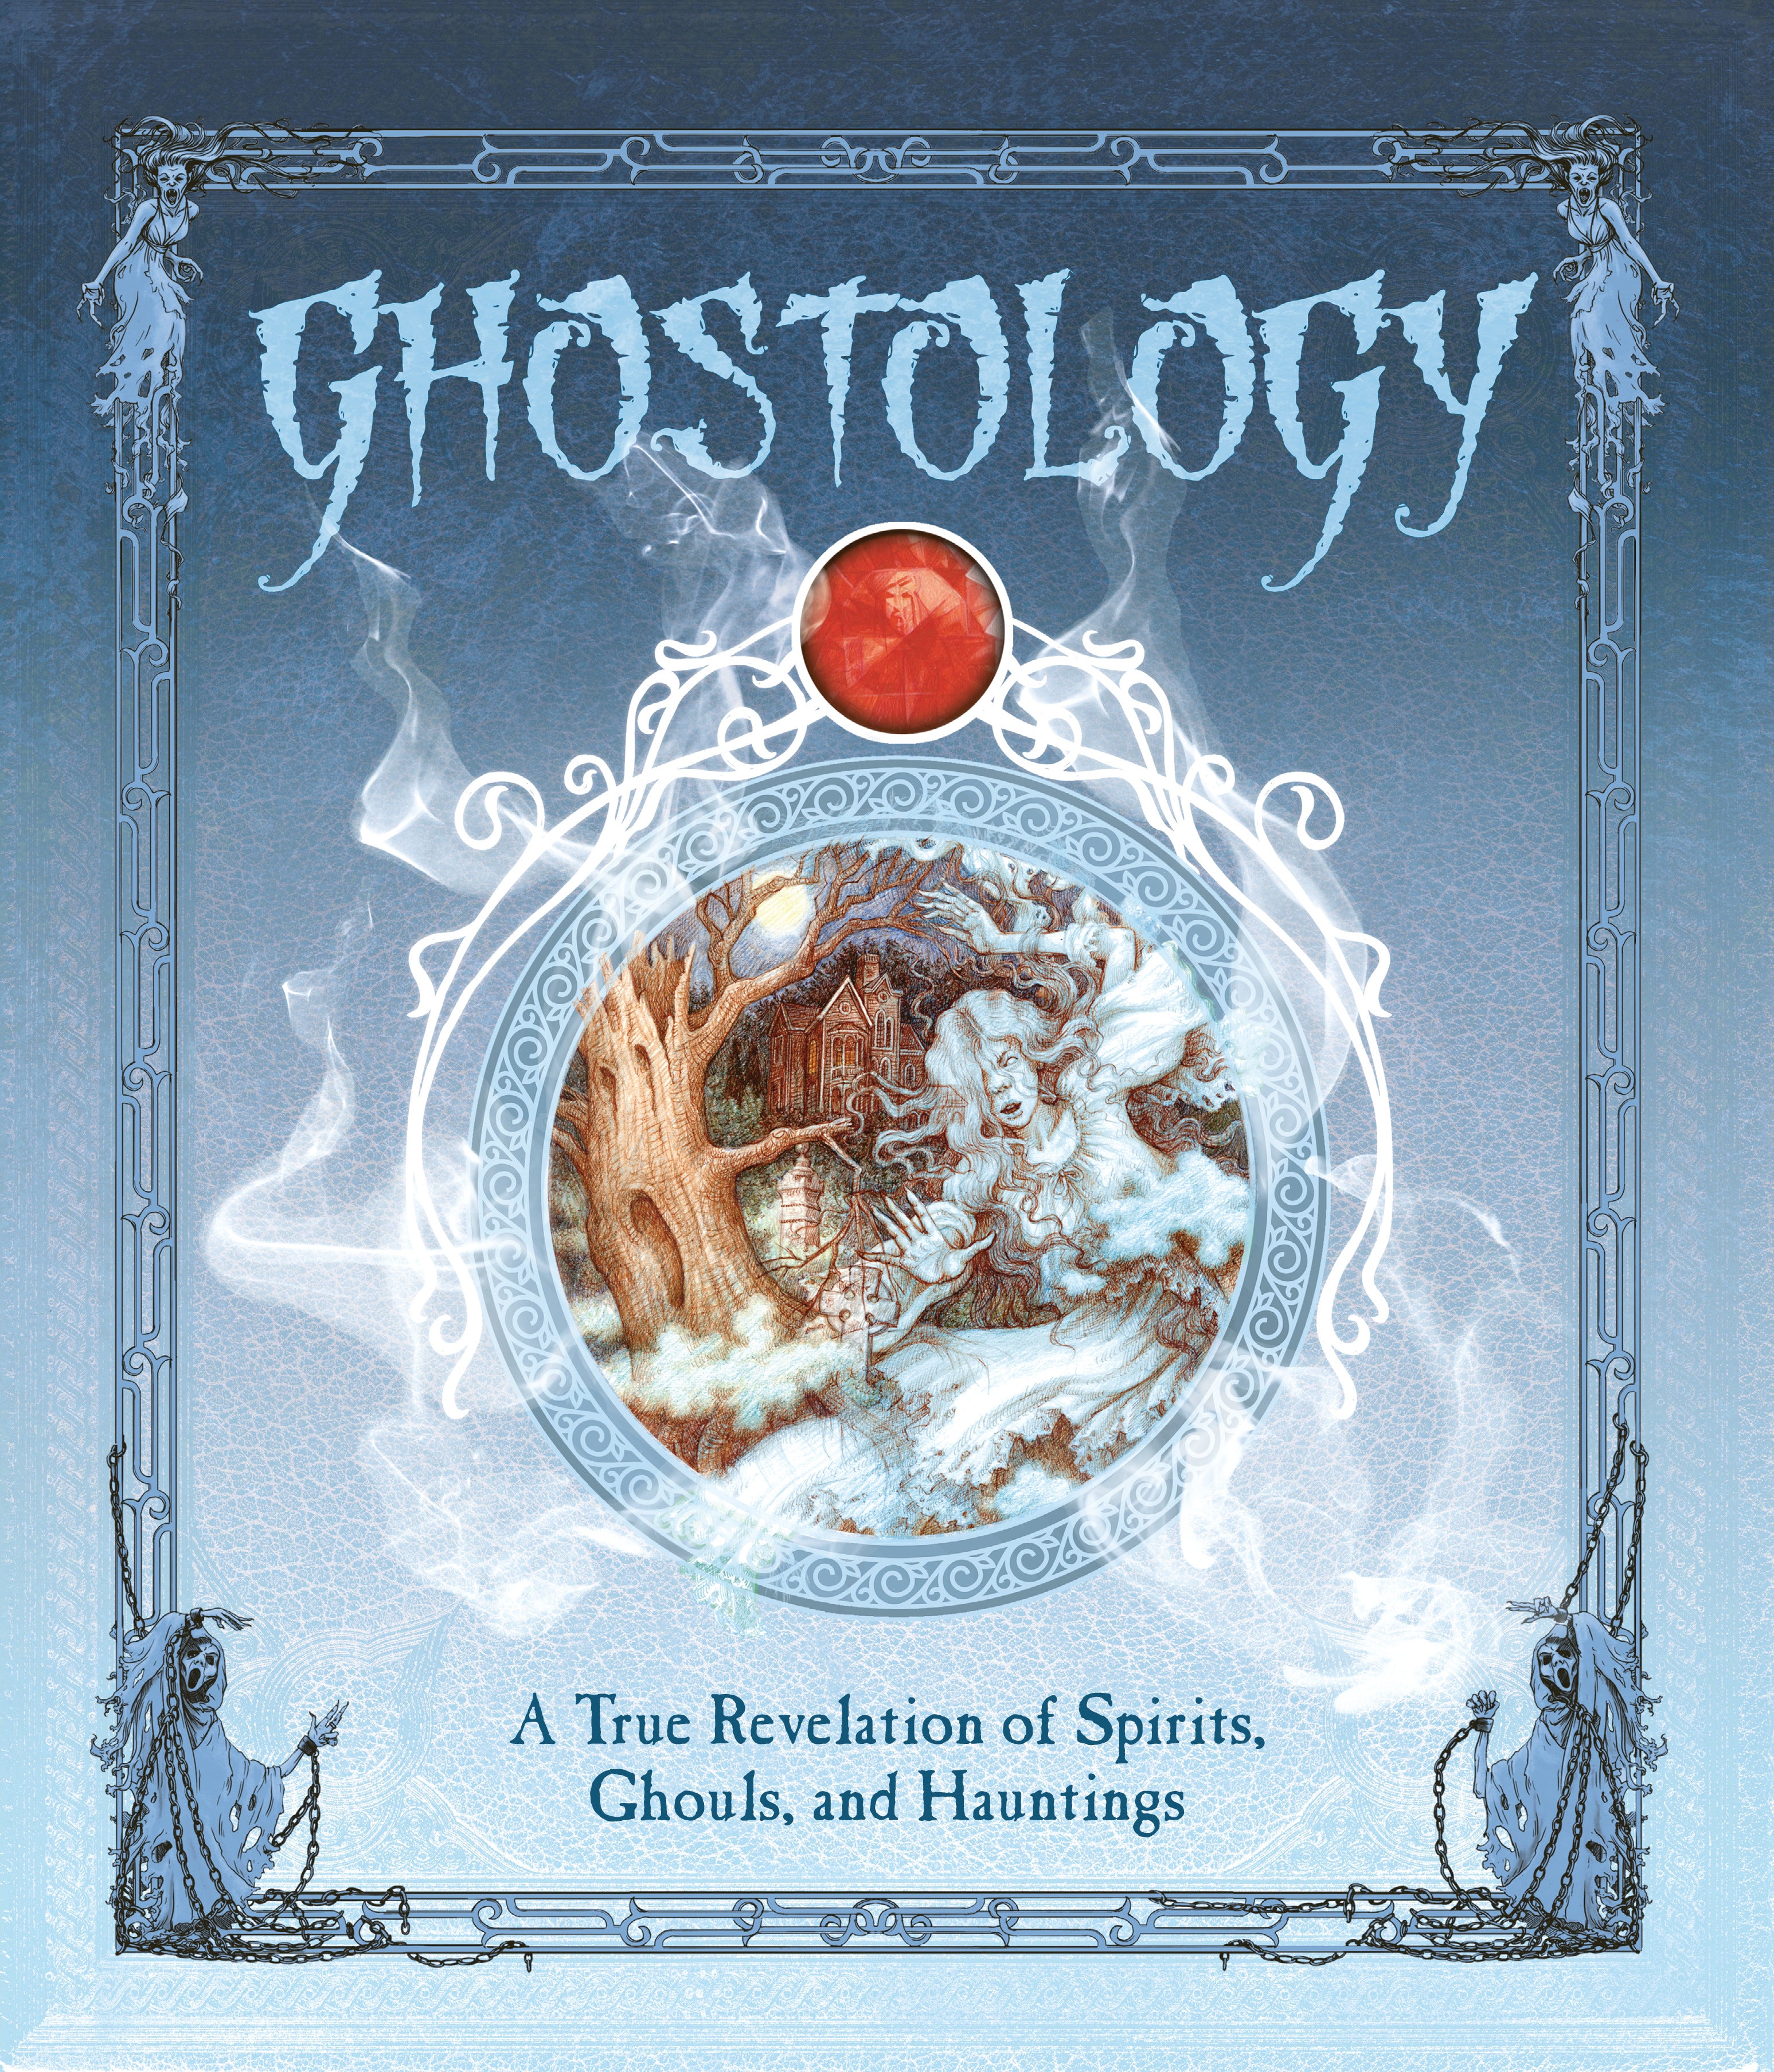 Ghostology